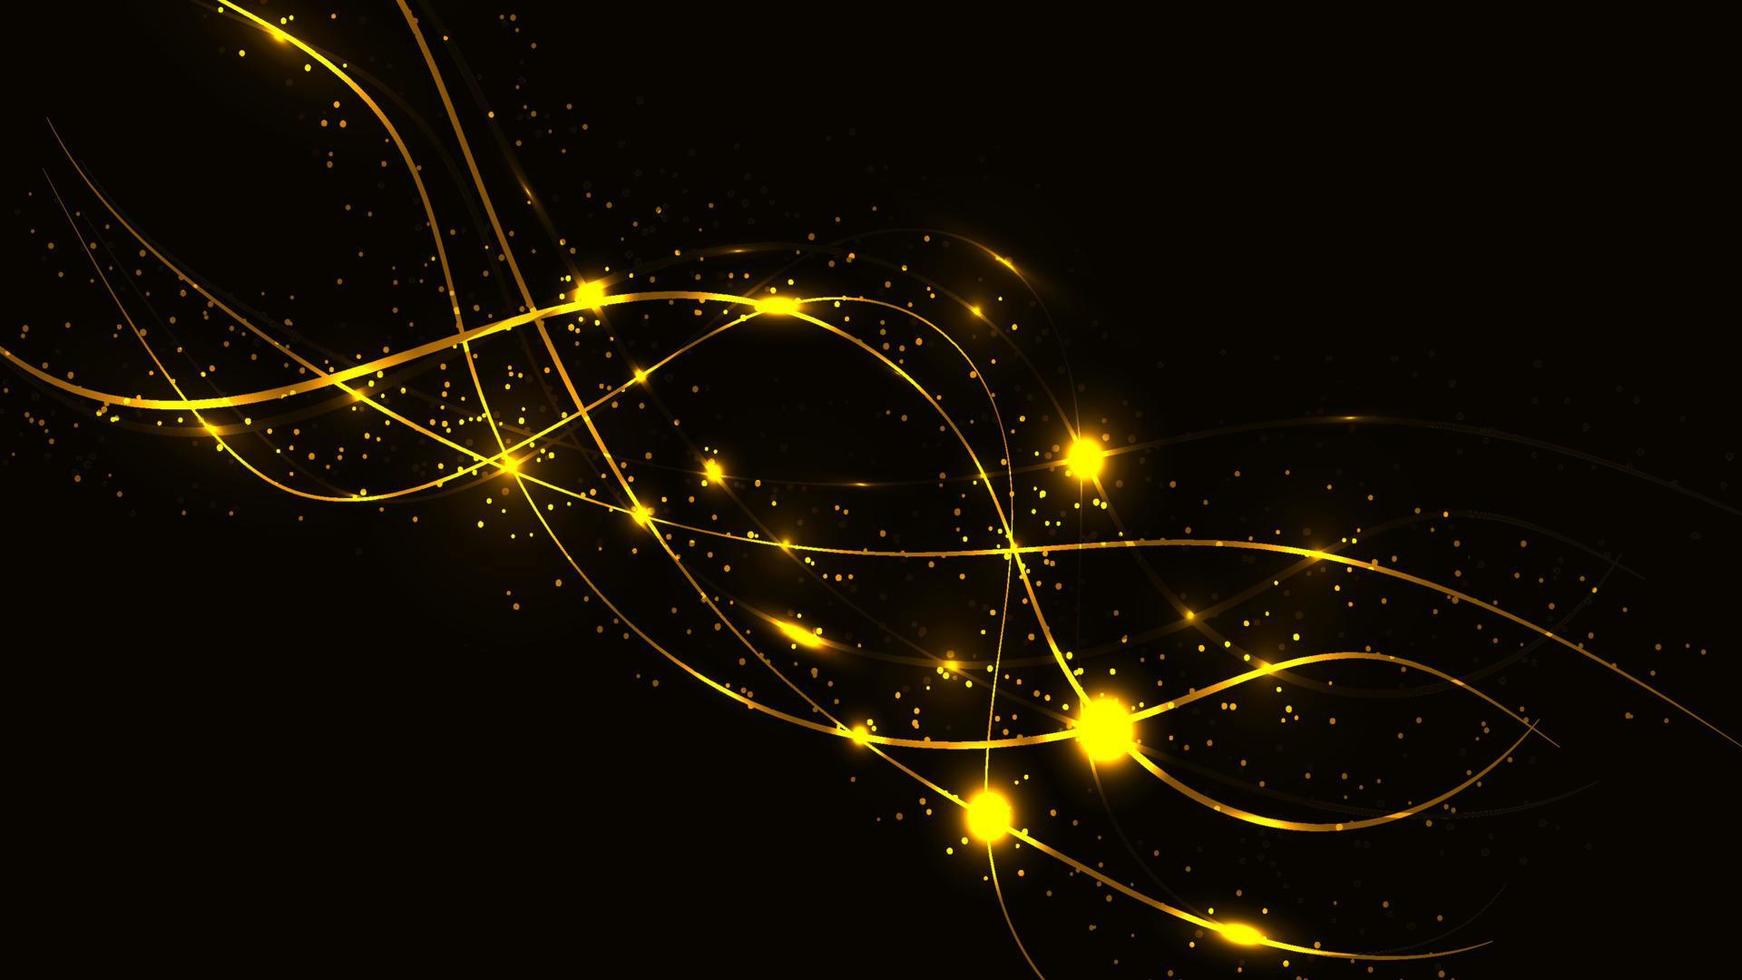 abstract geel mooi digitaal modern magisch glimmend elektrisch energie laser neon structuur met lijnen en golven strepen, achtergrond vector